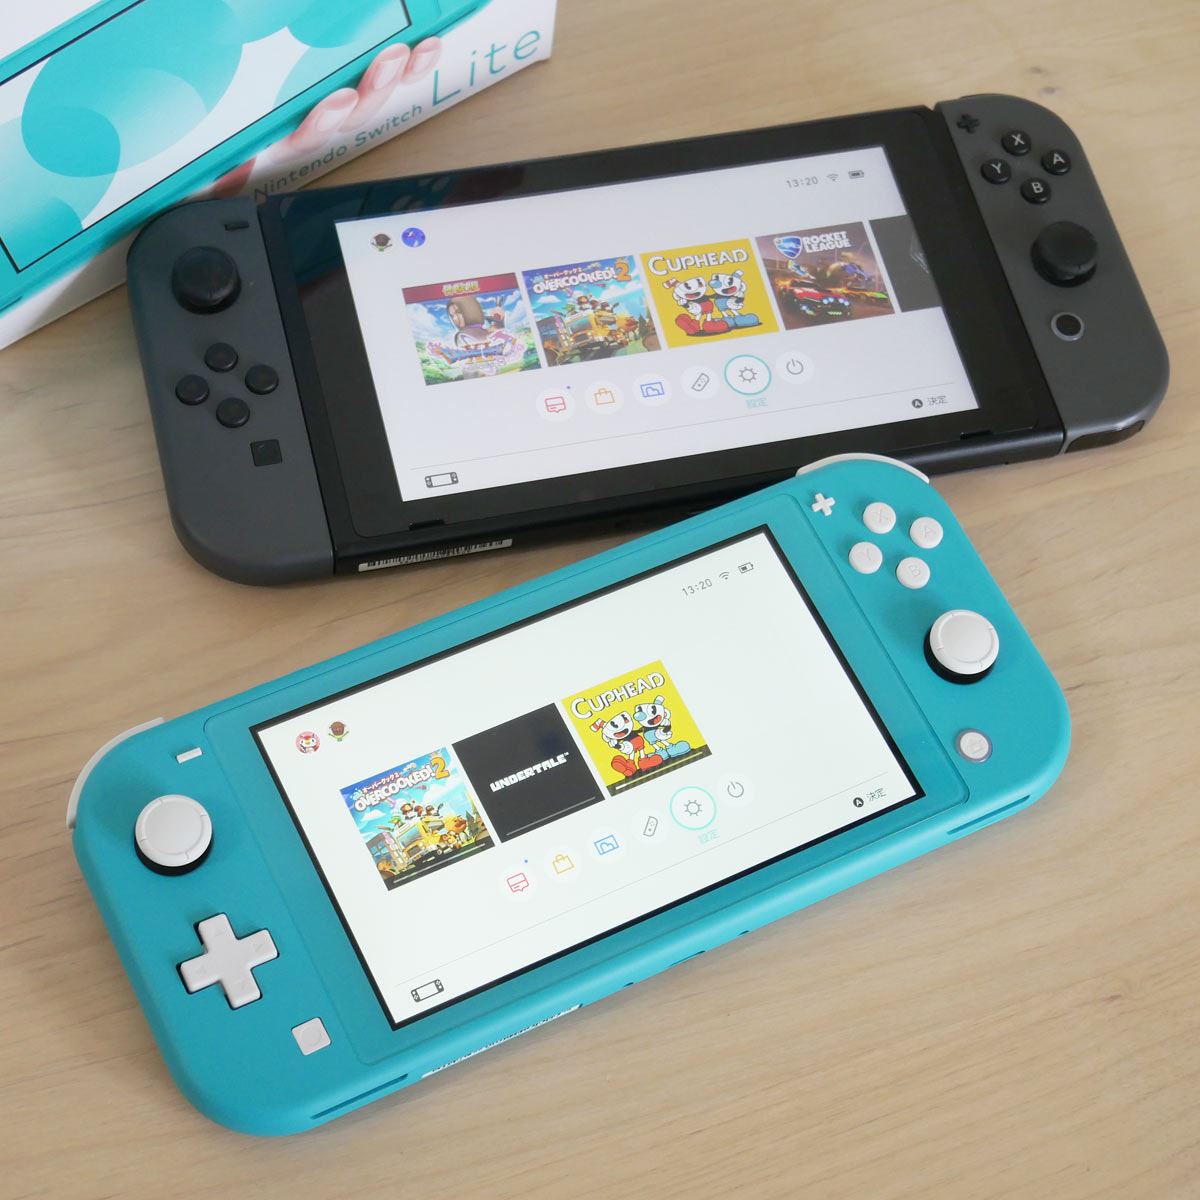 Nintendo SwitchとSwitch Lite、どっちを買うべき？ 比較して違いを